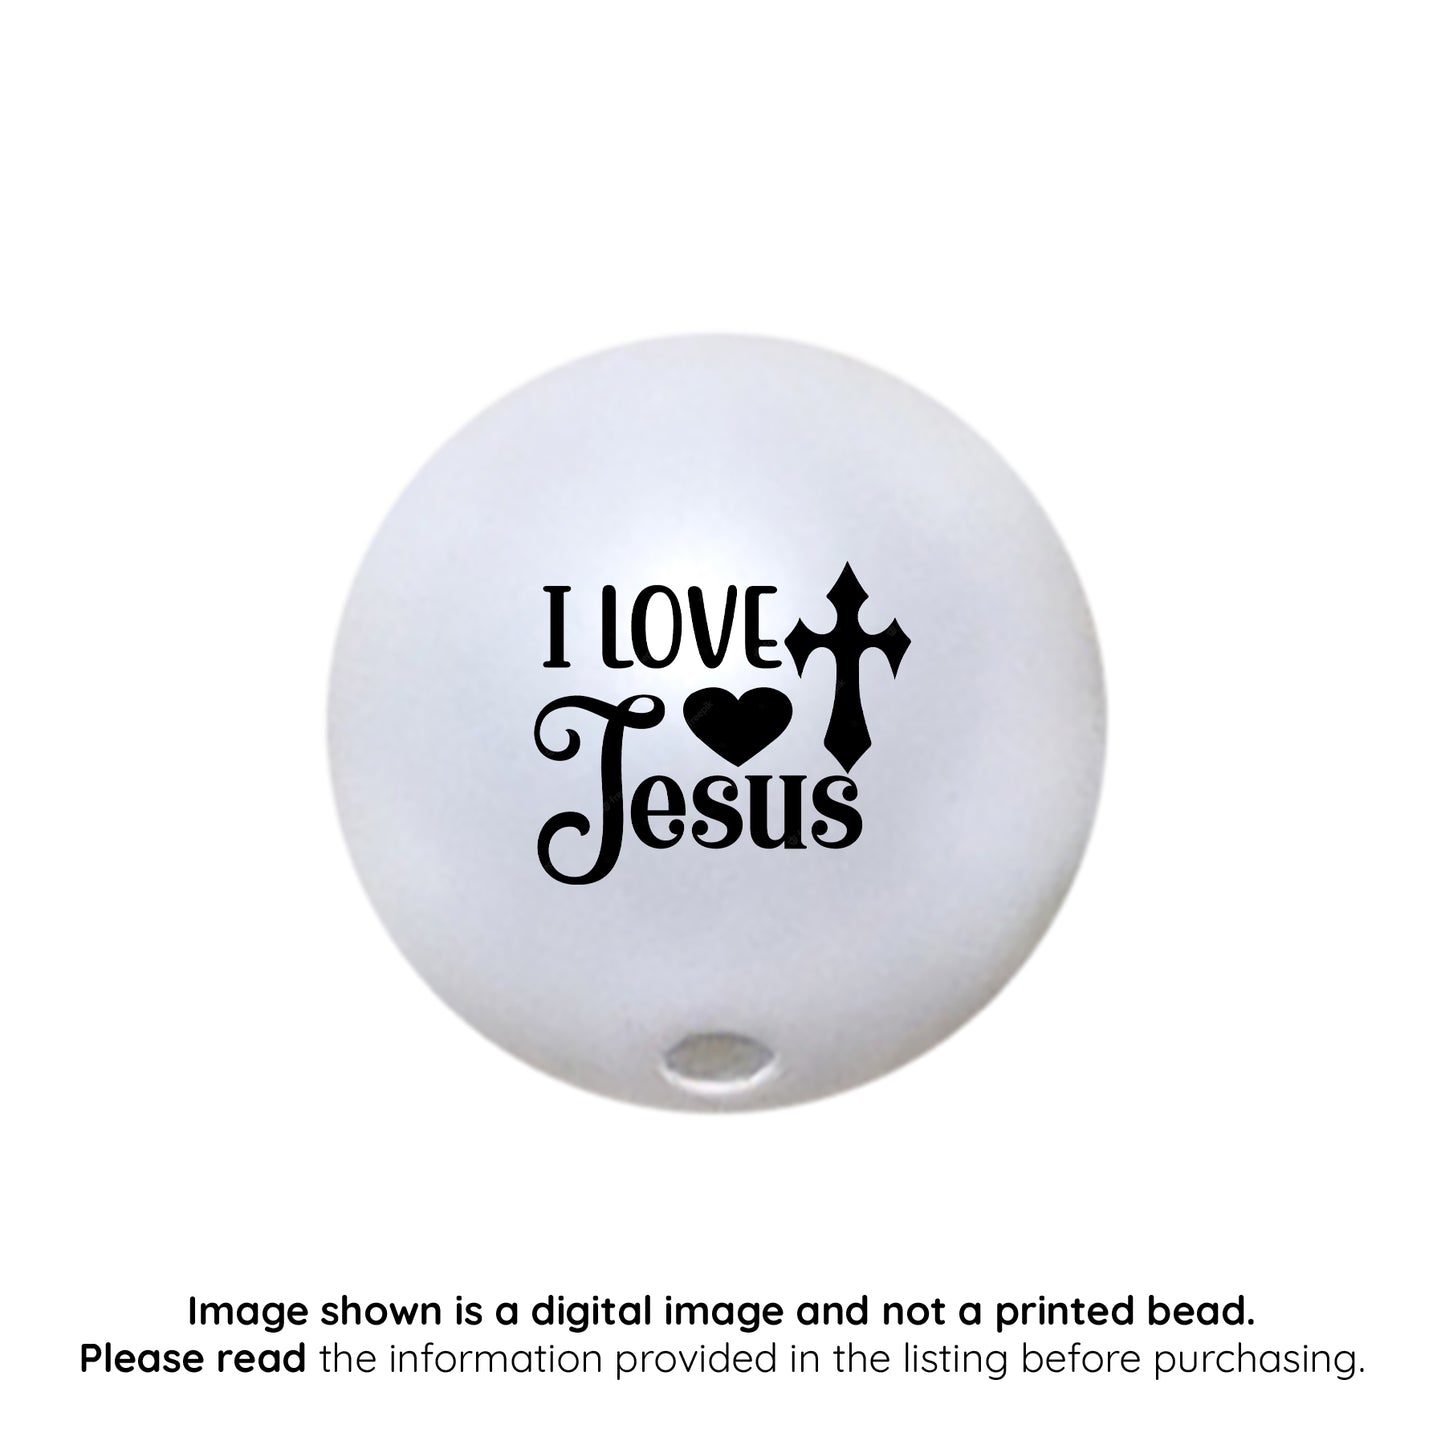 i love jesus custom printed 20mm bubblegum beads - sold per bead